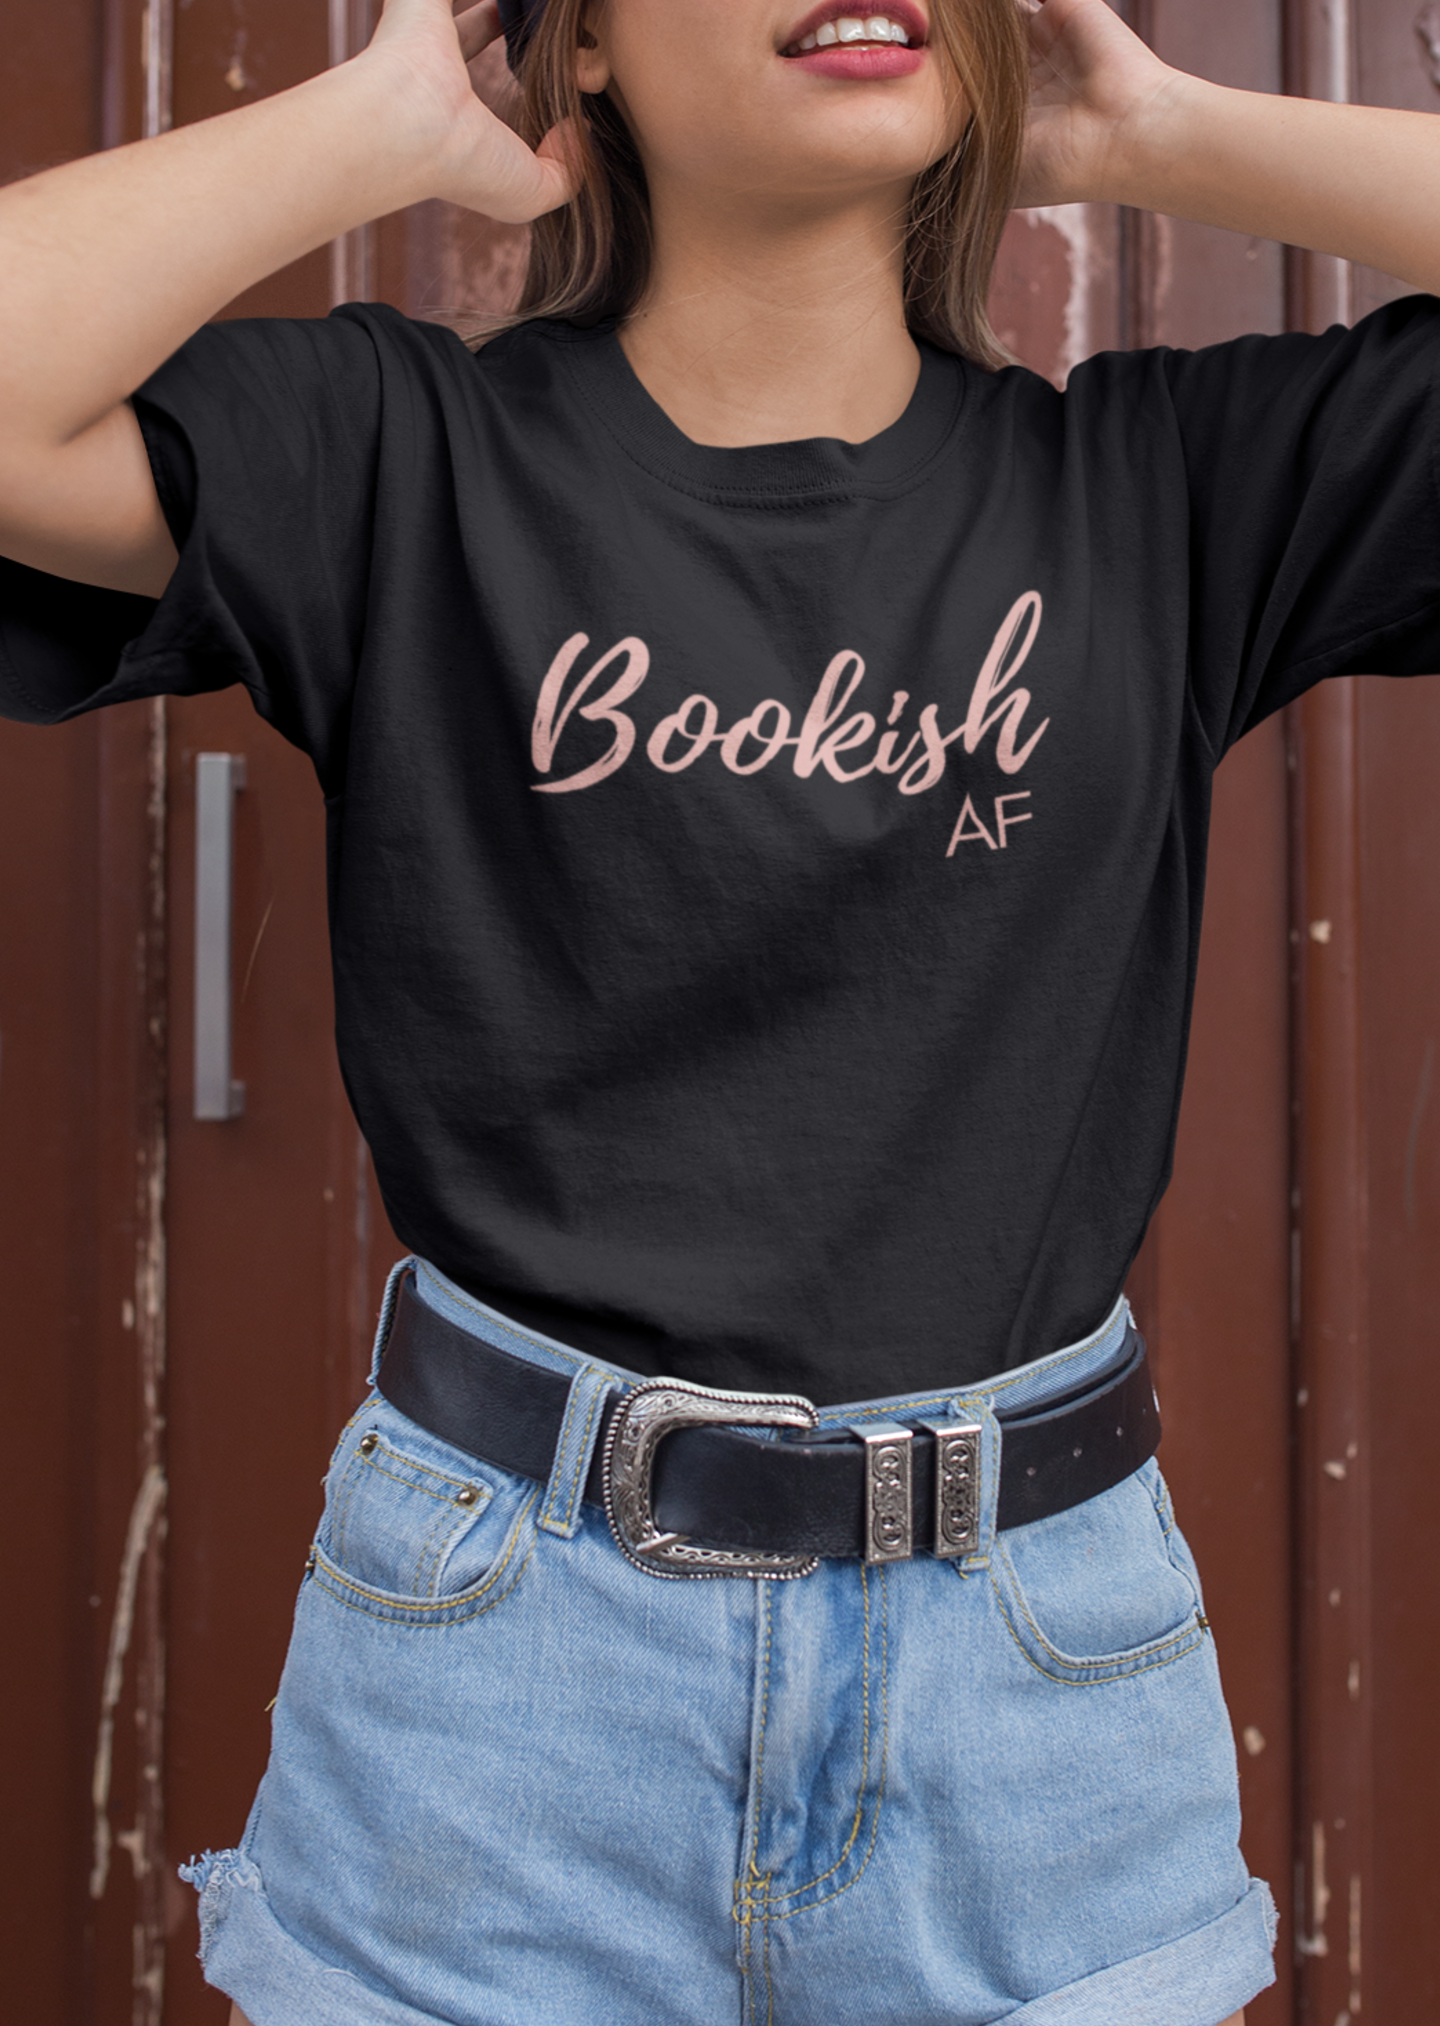 Bookish AF - Funny Bookish T-Shirt